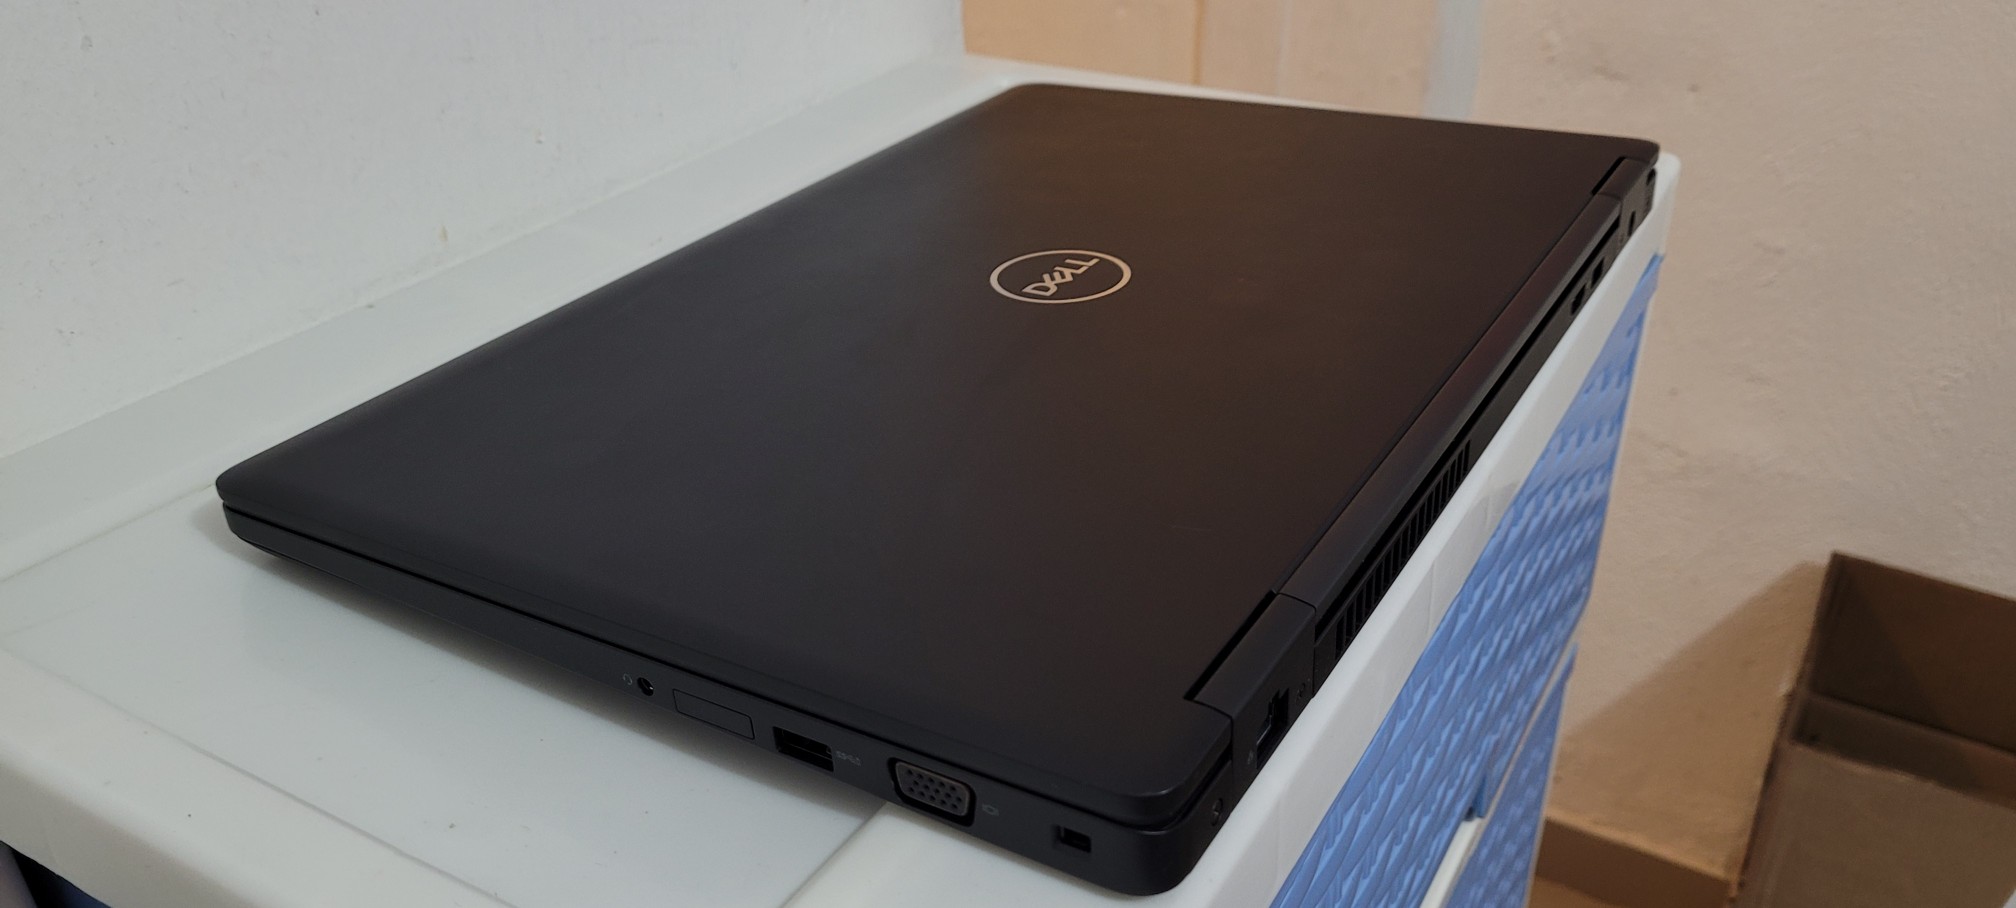 computadoras y laptops - Dell 5570 17 Pulg Core i5 6ta Ram 16gb ddr4 Disco 256gb SSD Video 8gb 2